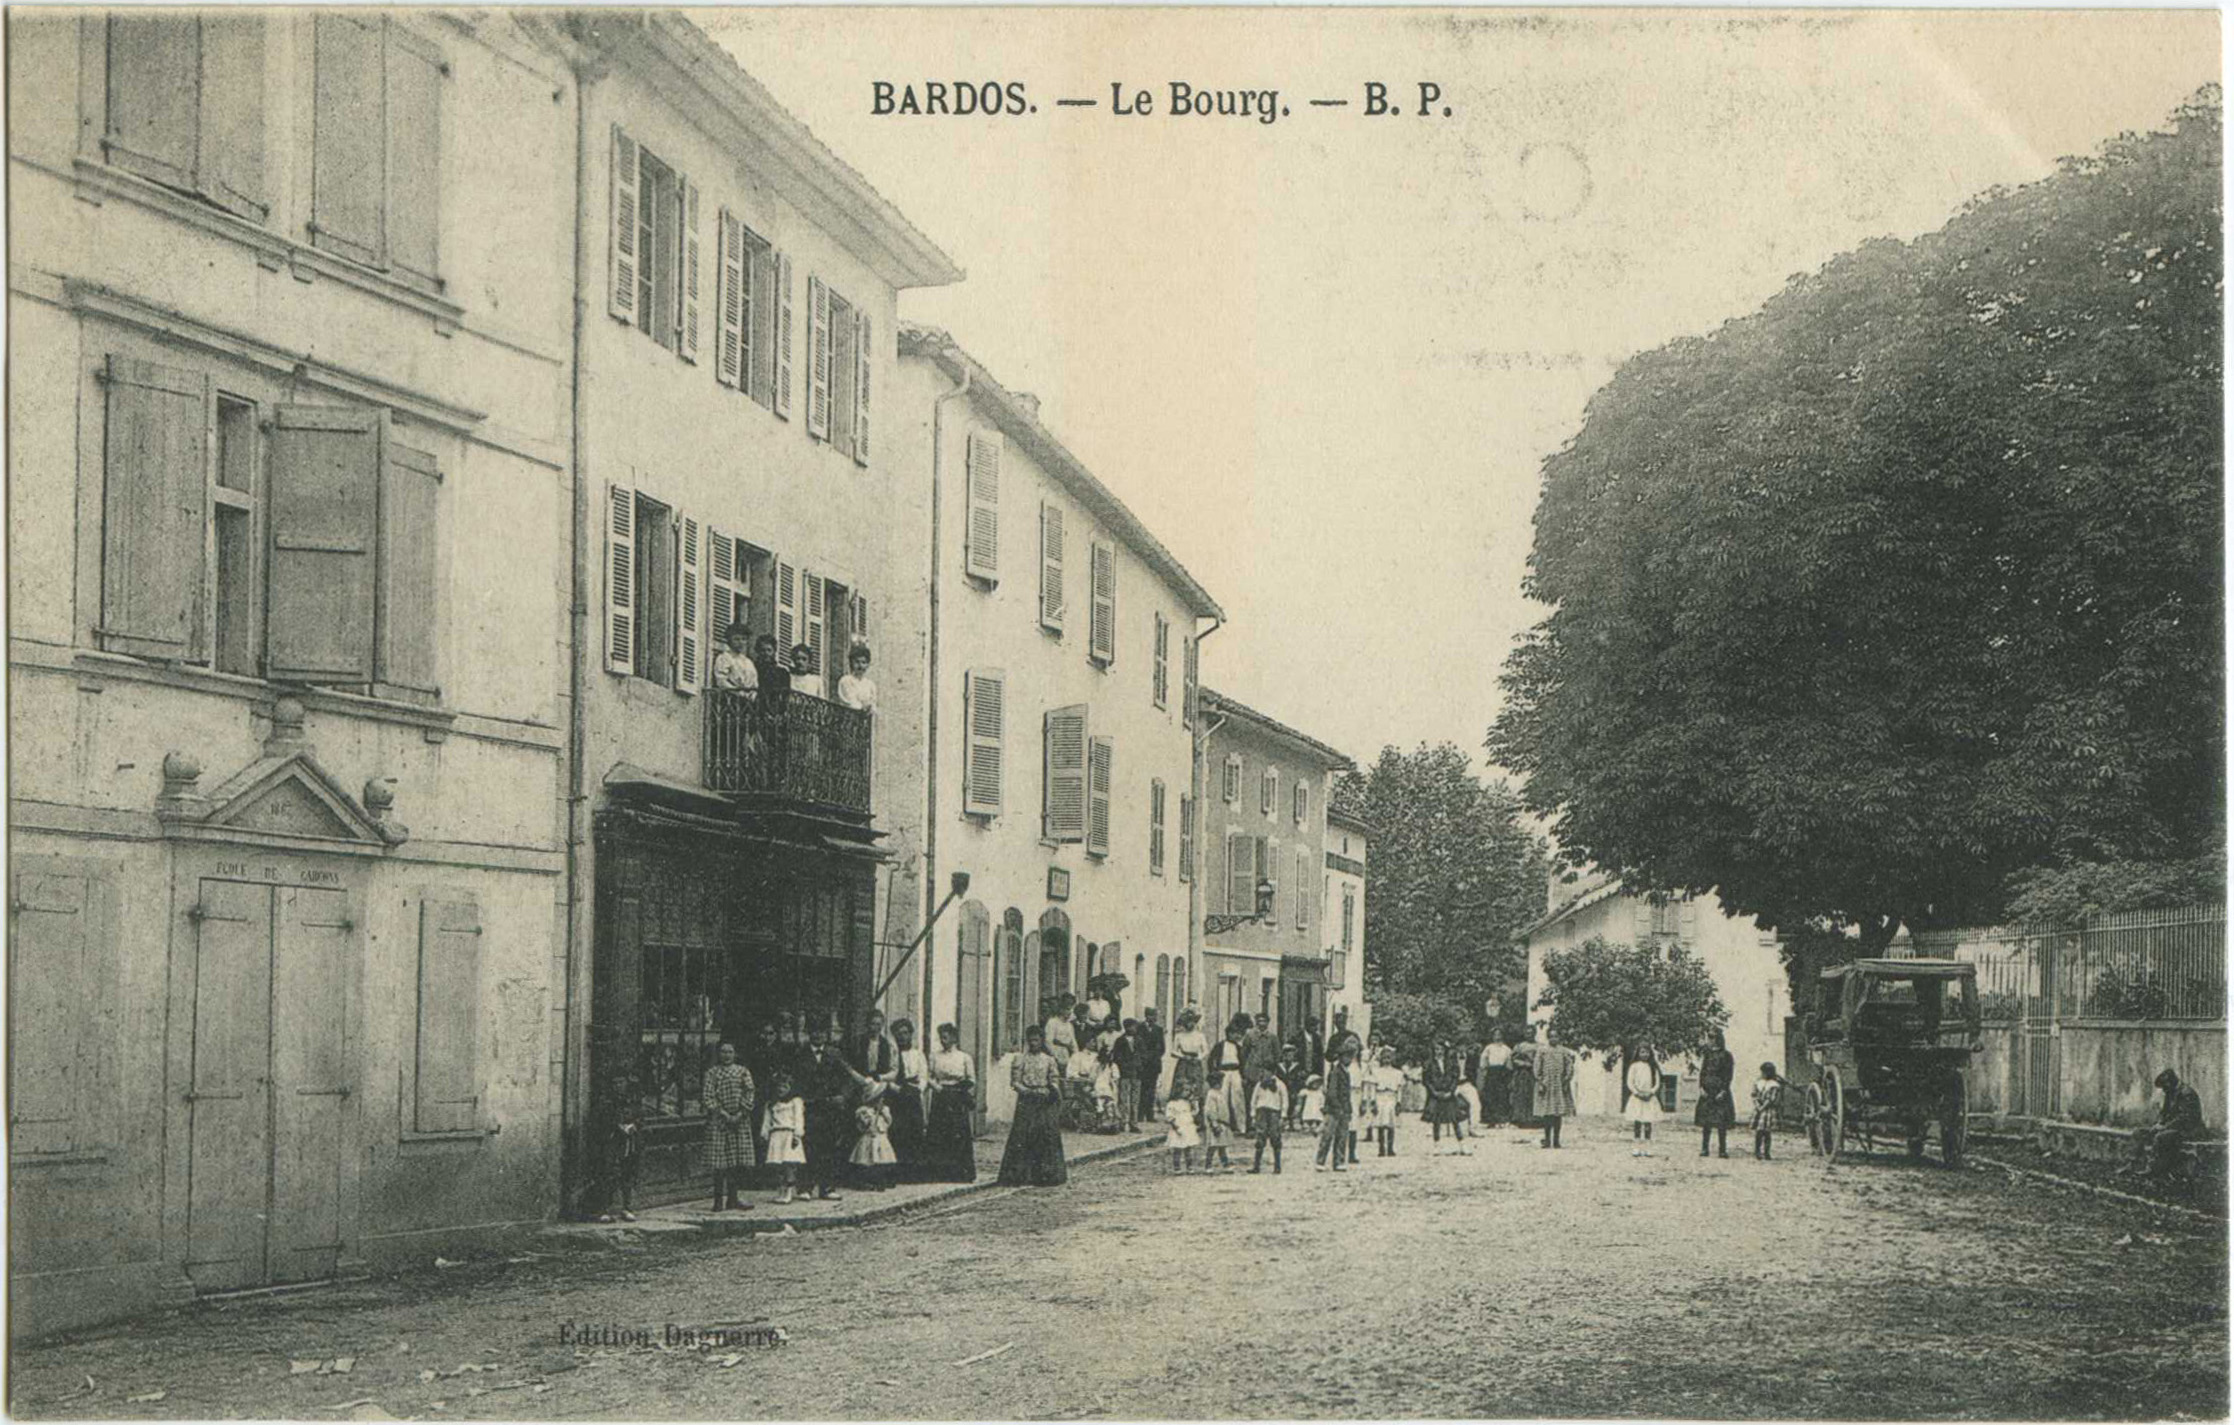 Bardos - Le Bourg